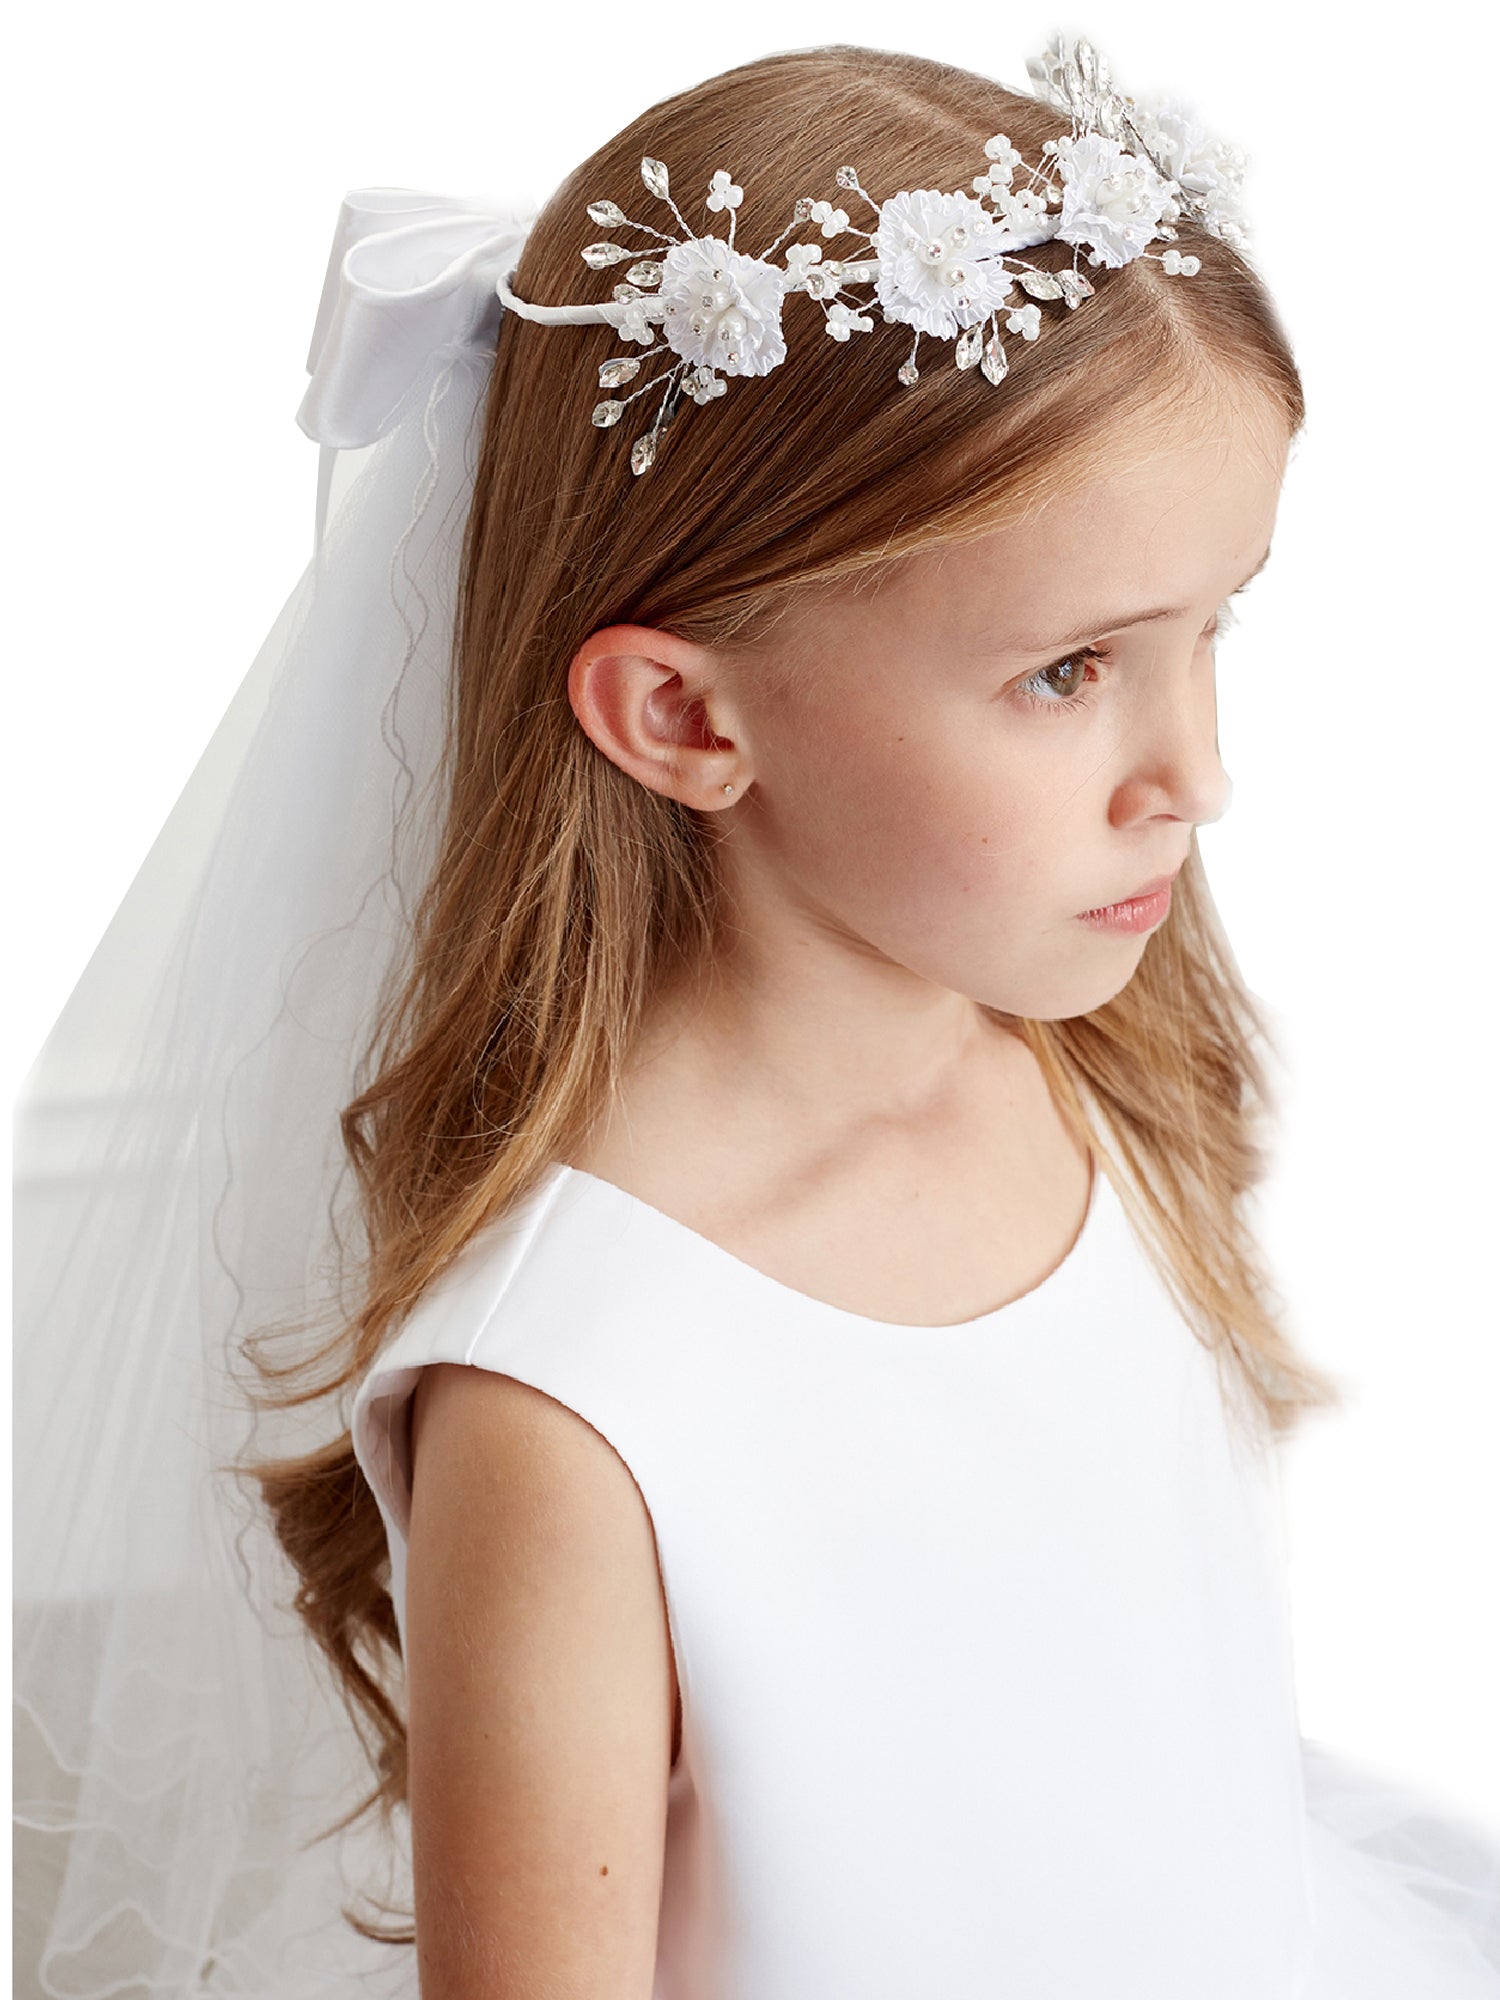 Kids Dream White Communion Flower Pearl Crown Veil